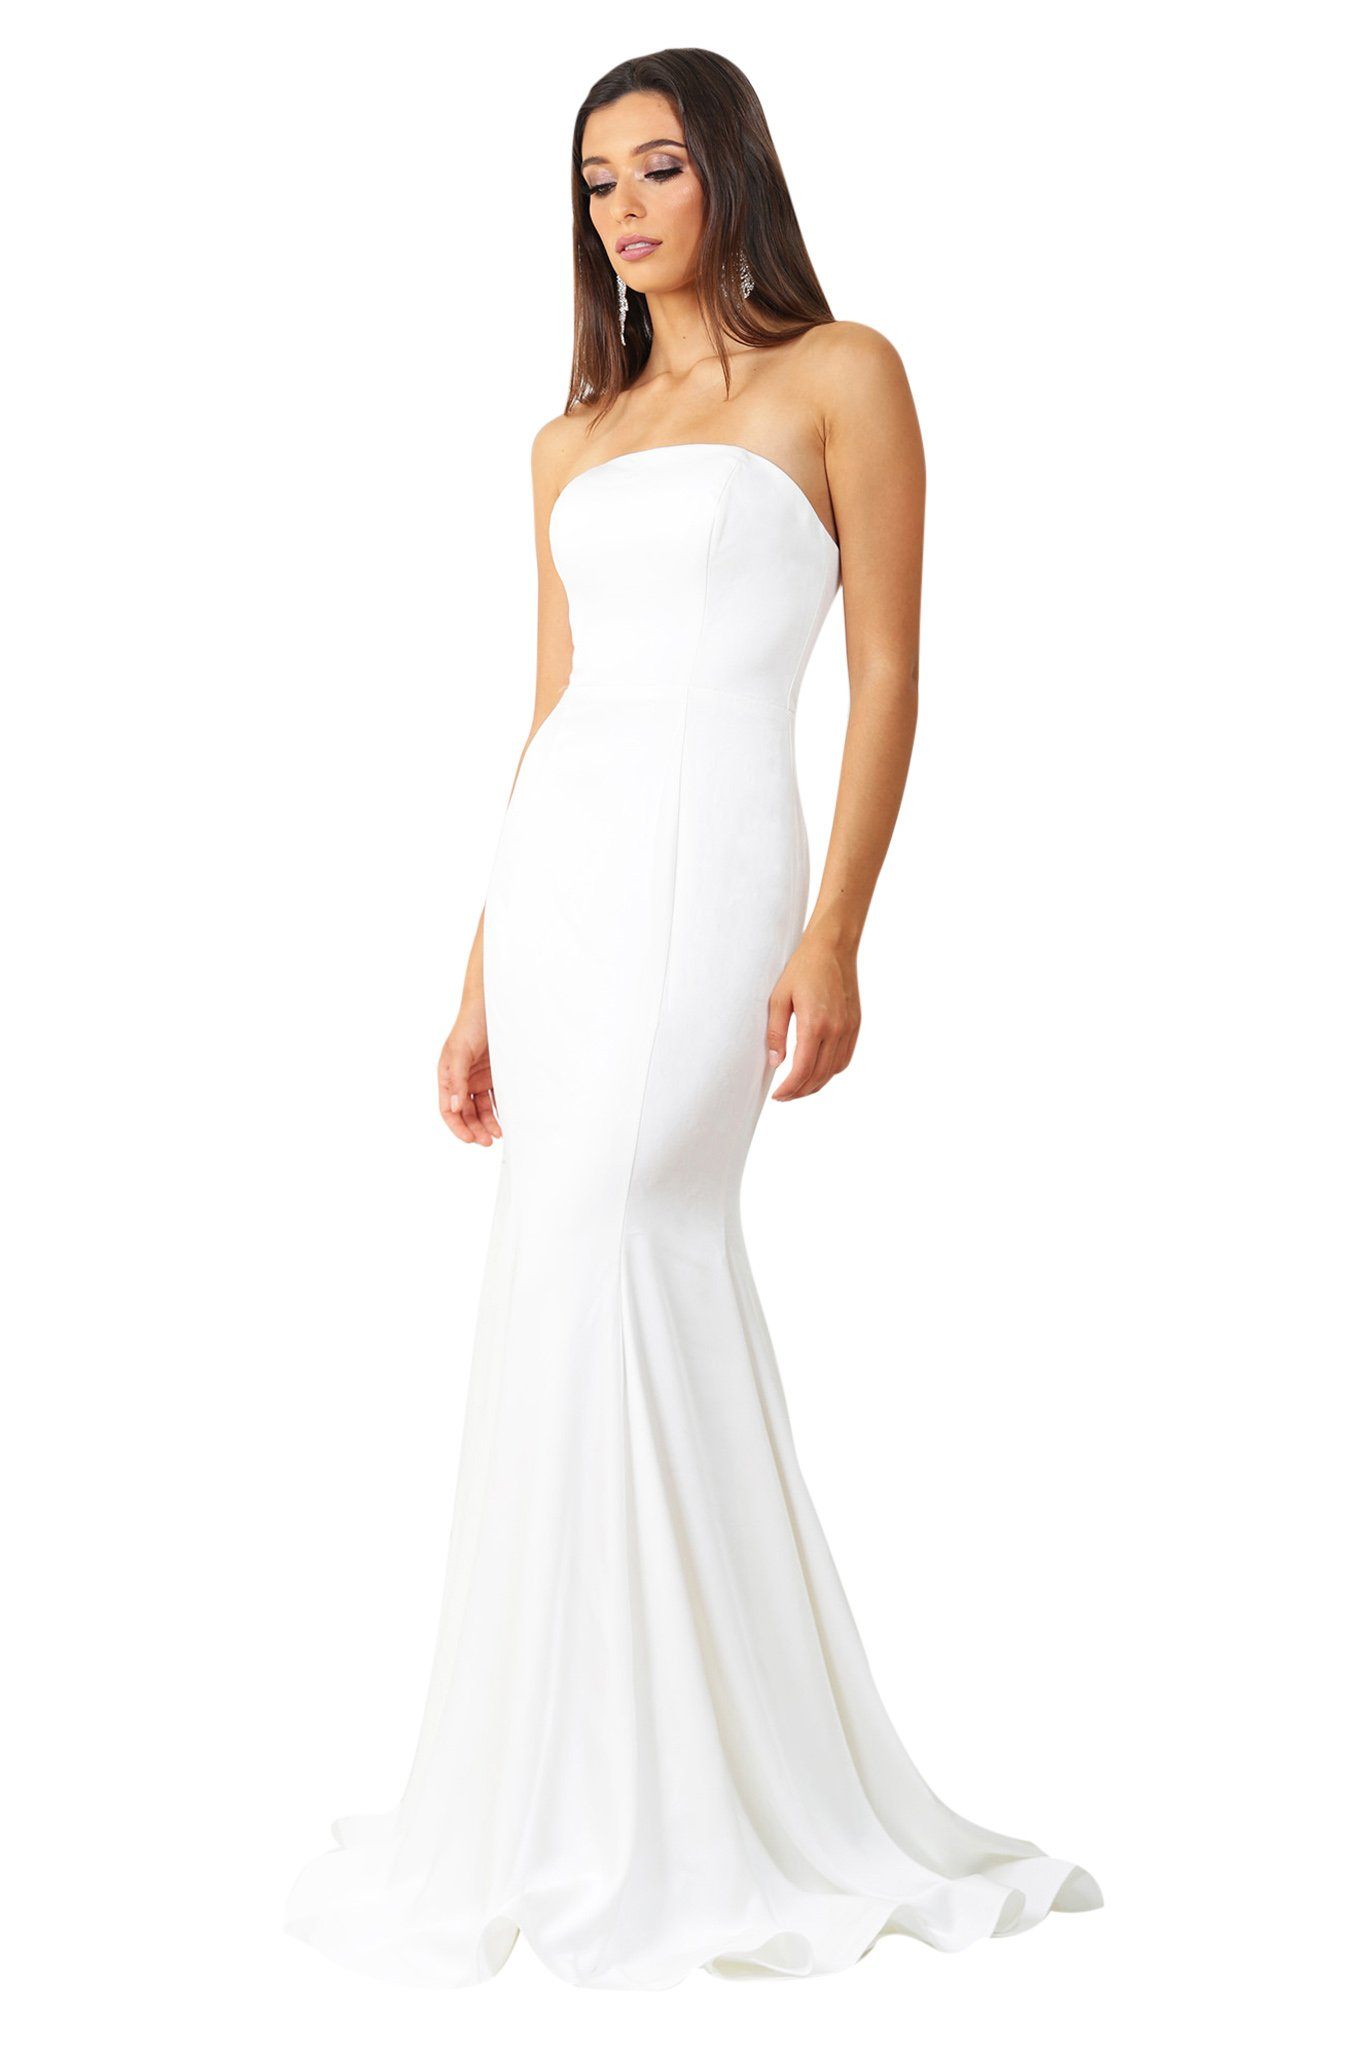 White Strapless Evening Dress Online ...